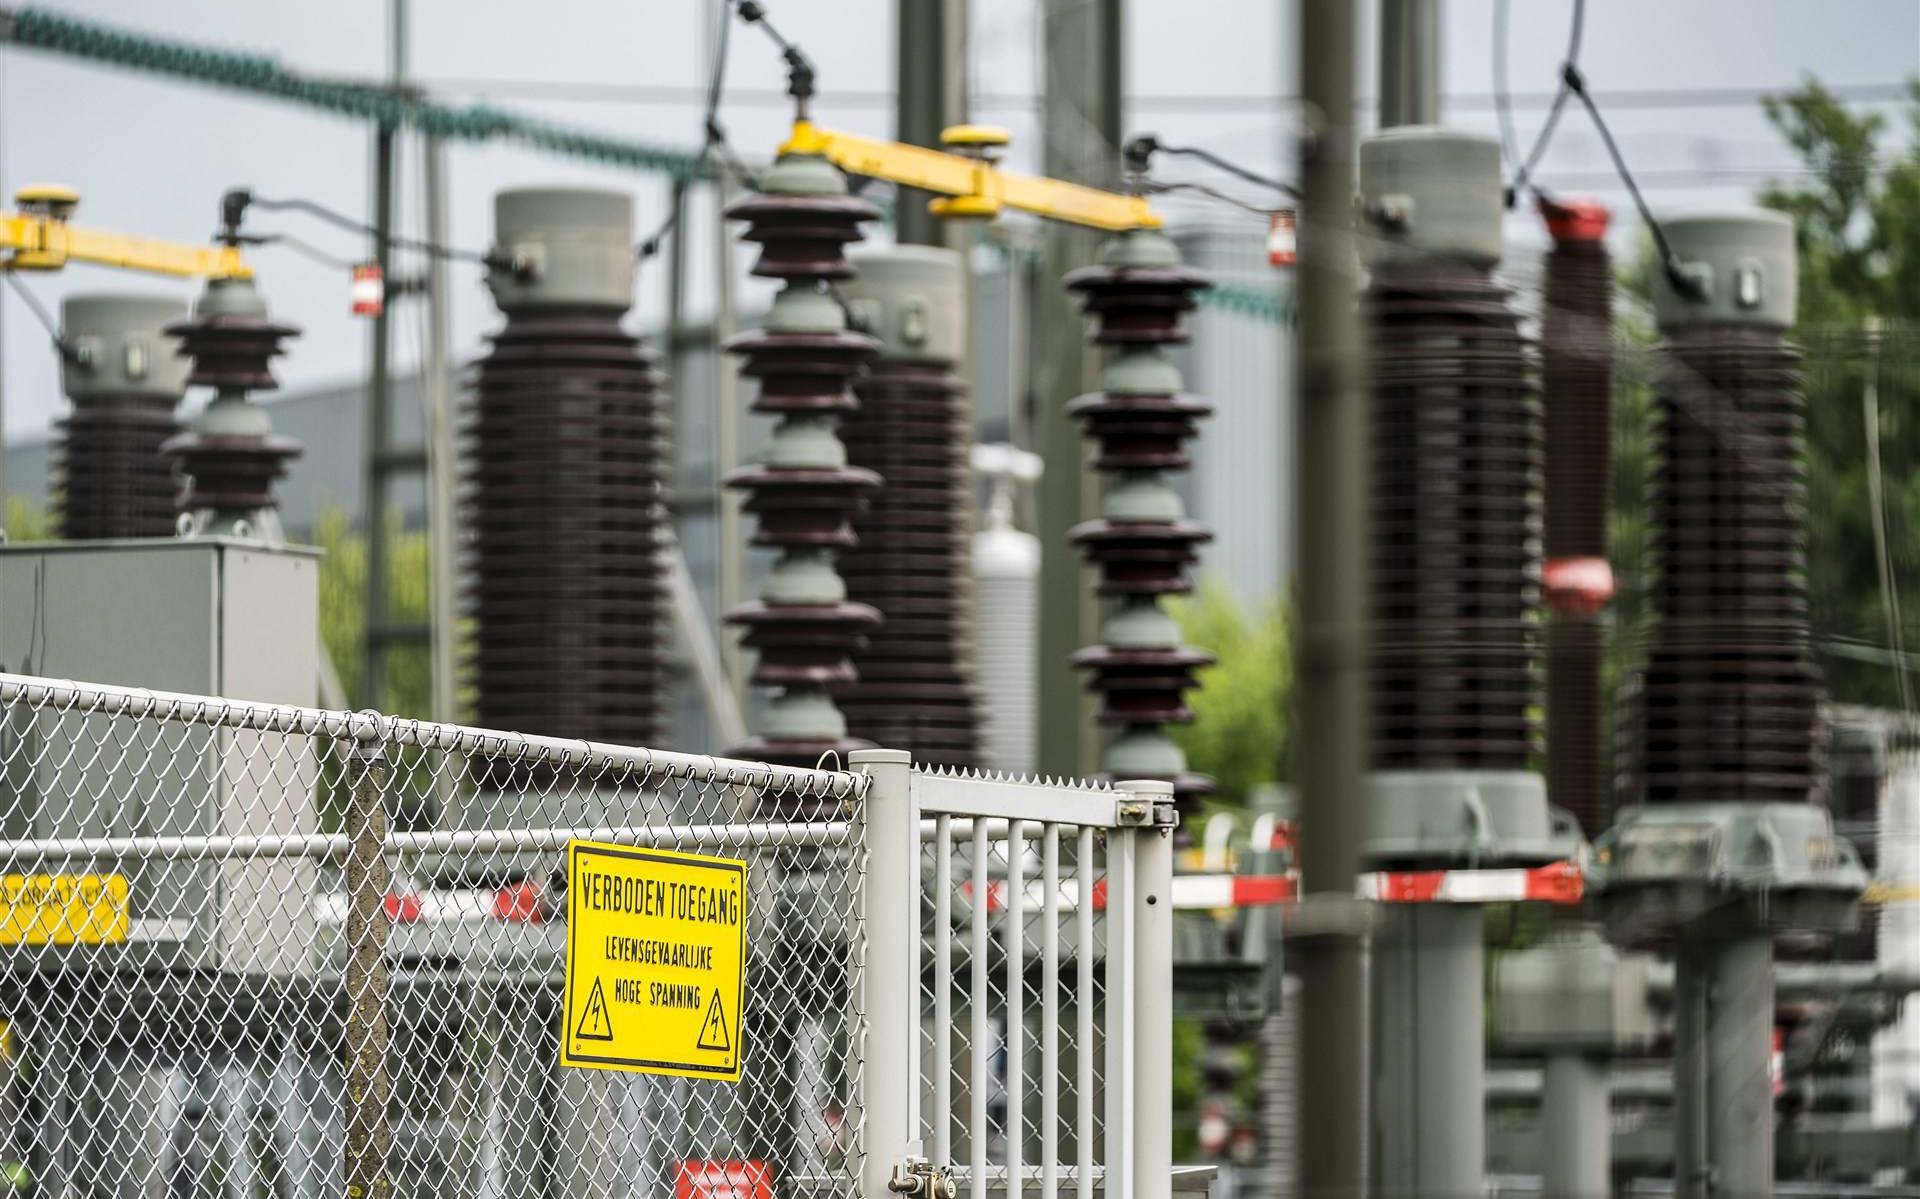 TenneT: temporary shutdown of new generation installations in the Noordoostpolder and Urk